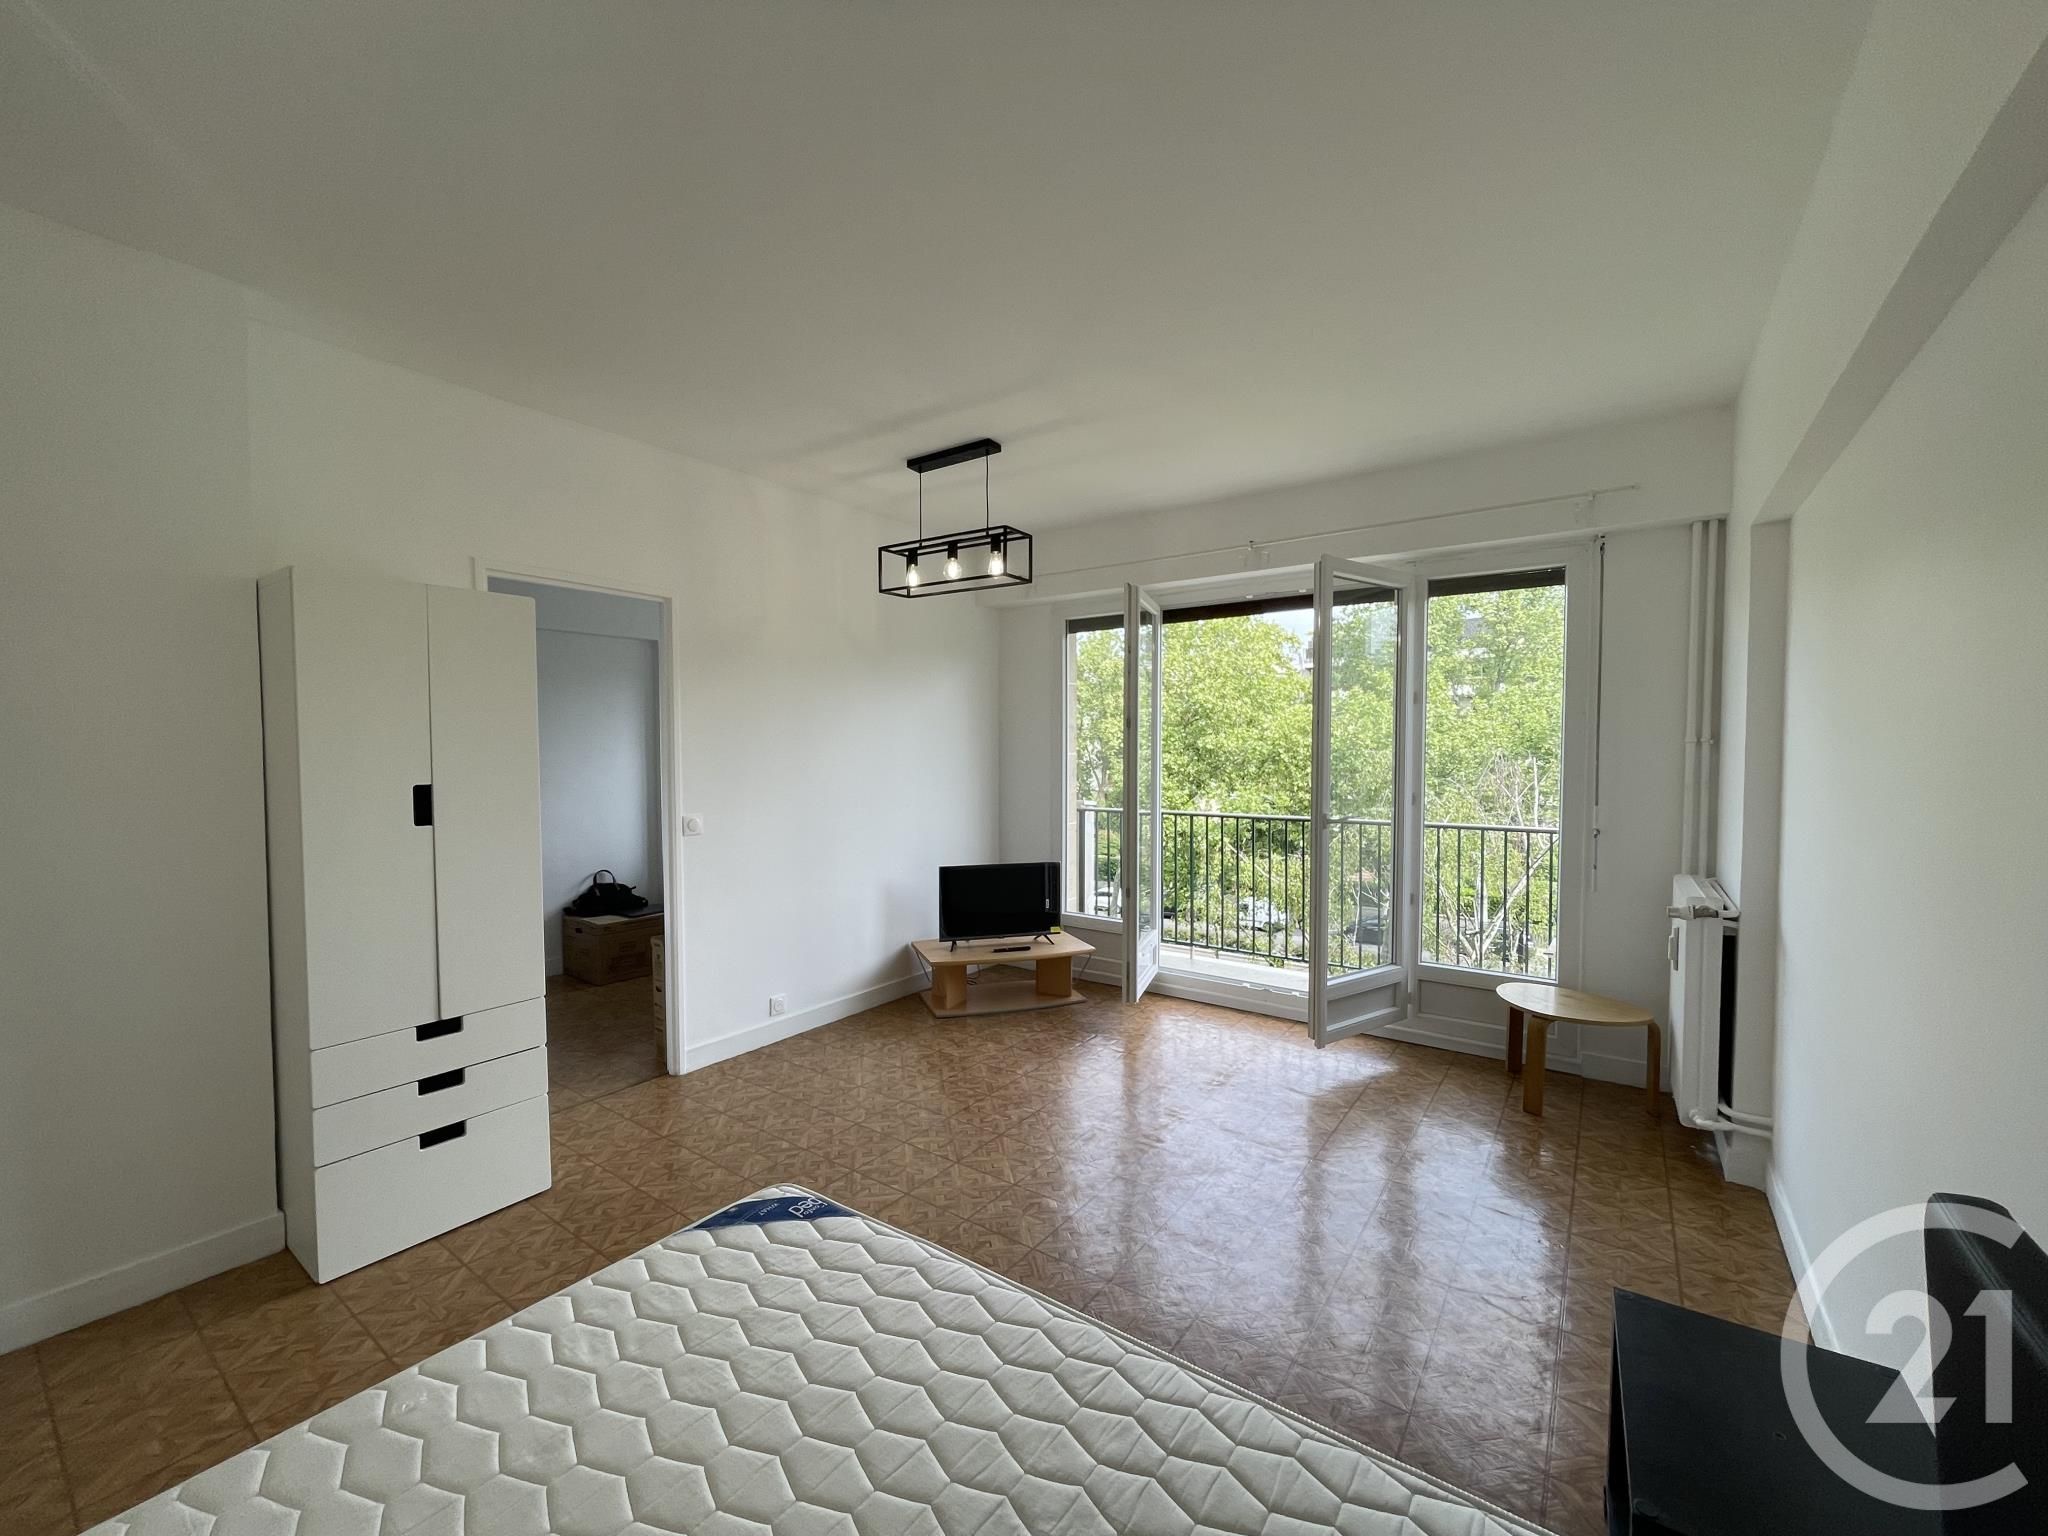 Appartement a louer neuilly-sur-seine - 1 pièce(s) - 32.79 m2 - Surfyn